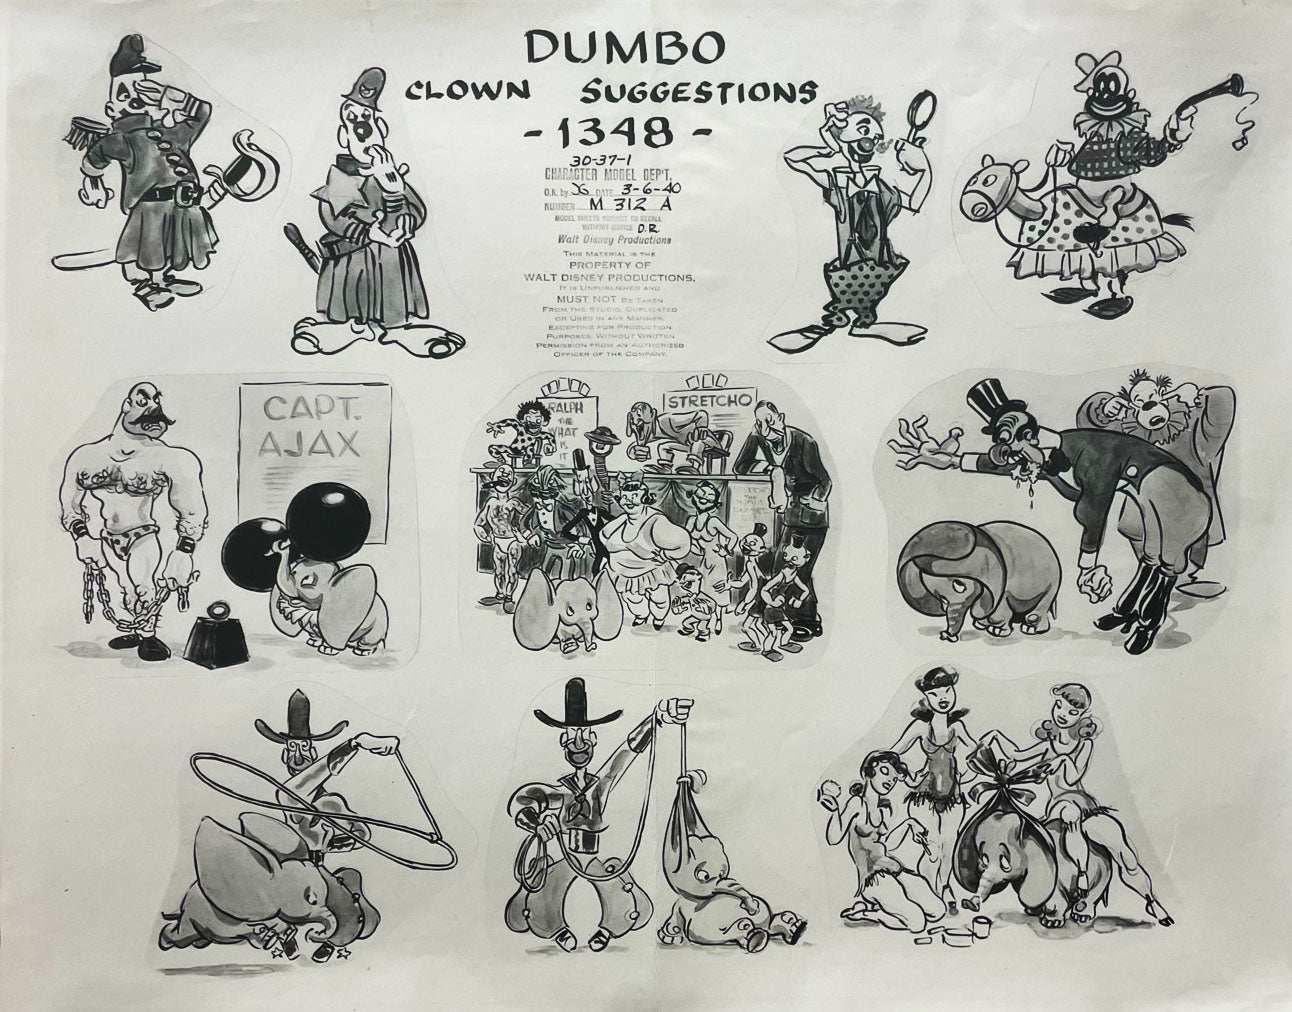 Dumbo Clown Suggestions Original Production Model Sheet - Art by Walt Disney Studio Artists